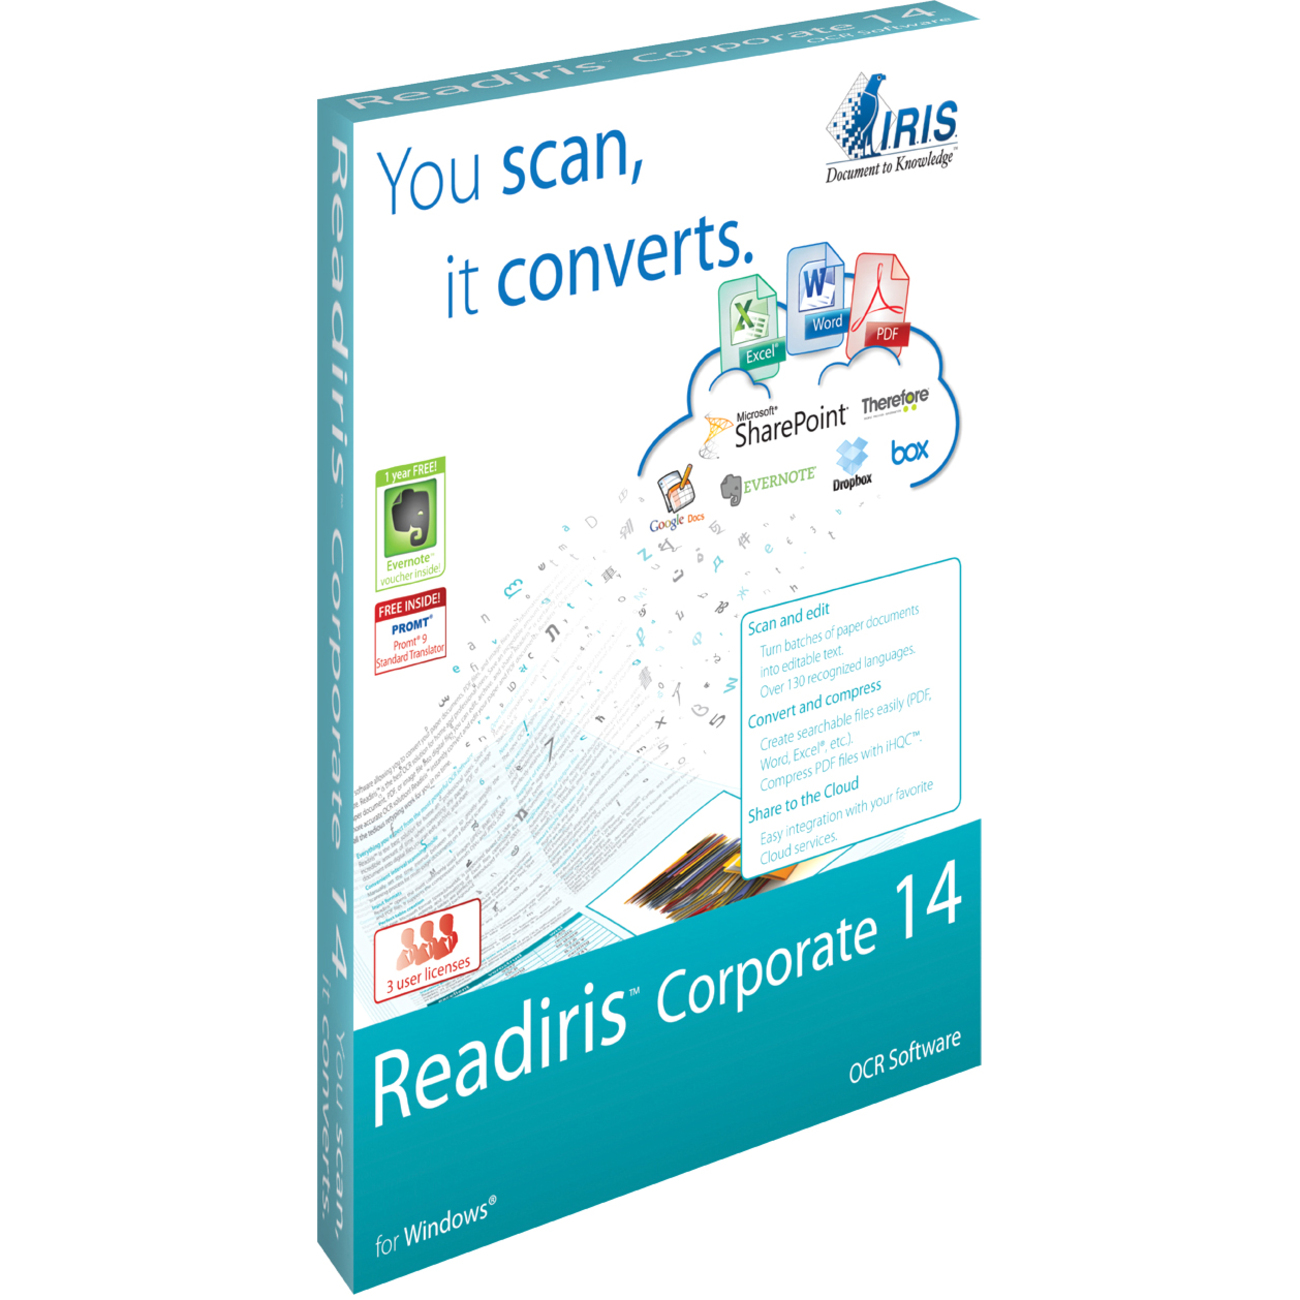 IRIS Readiris Corp 14 for PC Converts